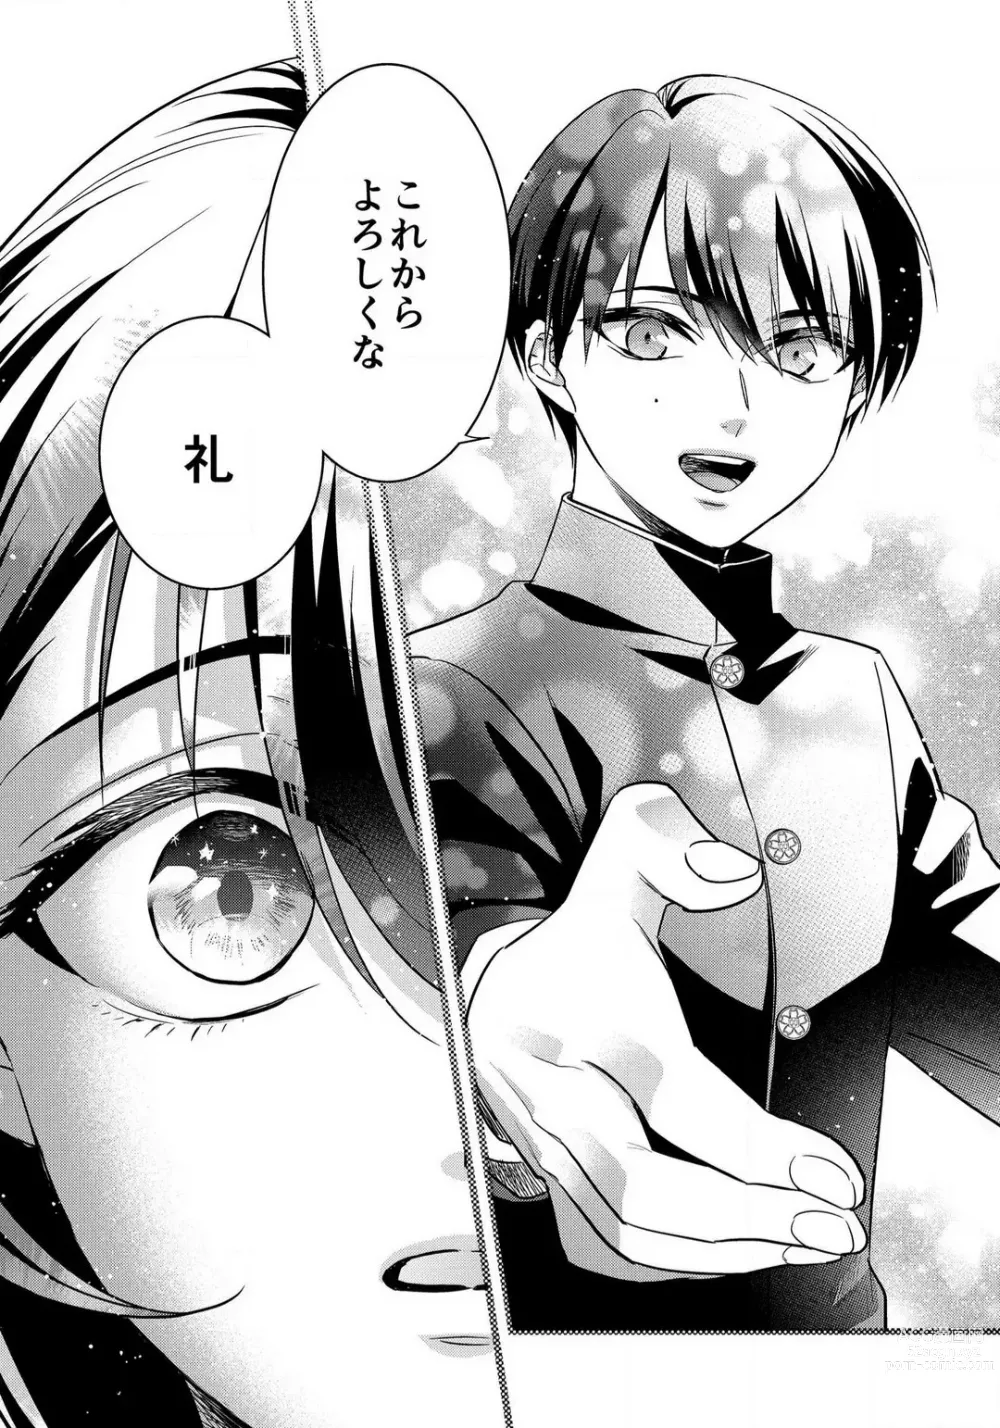 Page 829 of manga Ijimerare - Onna